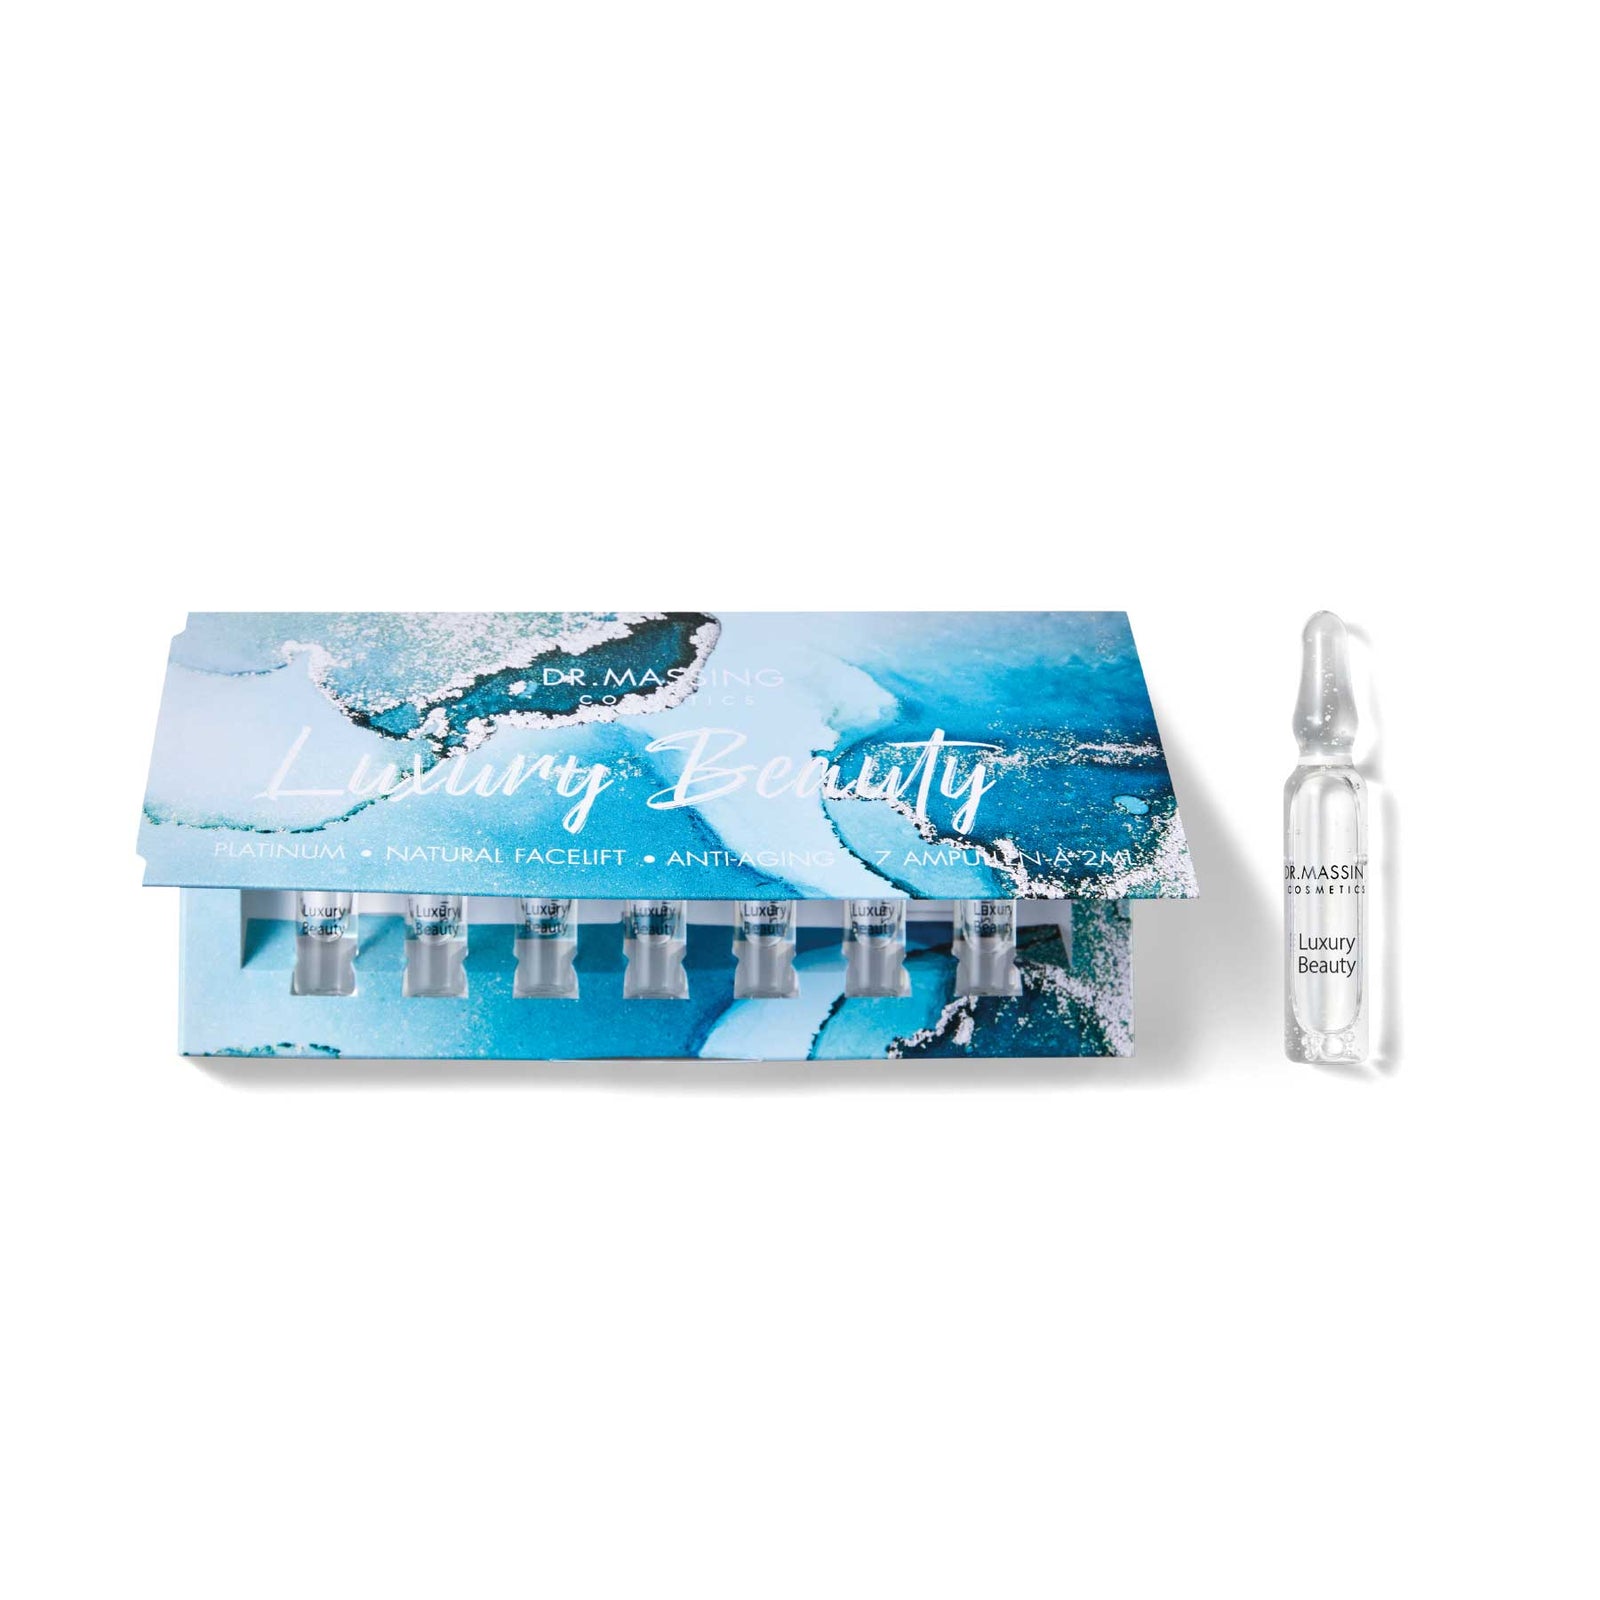 Dr. Massing Luxury Beauty Ampullen Platinum + Natural Facelift und Anti-Aging Verpackung Box Freisteller